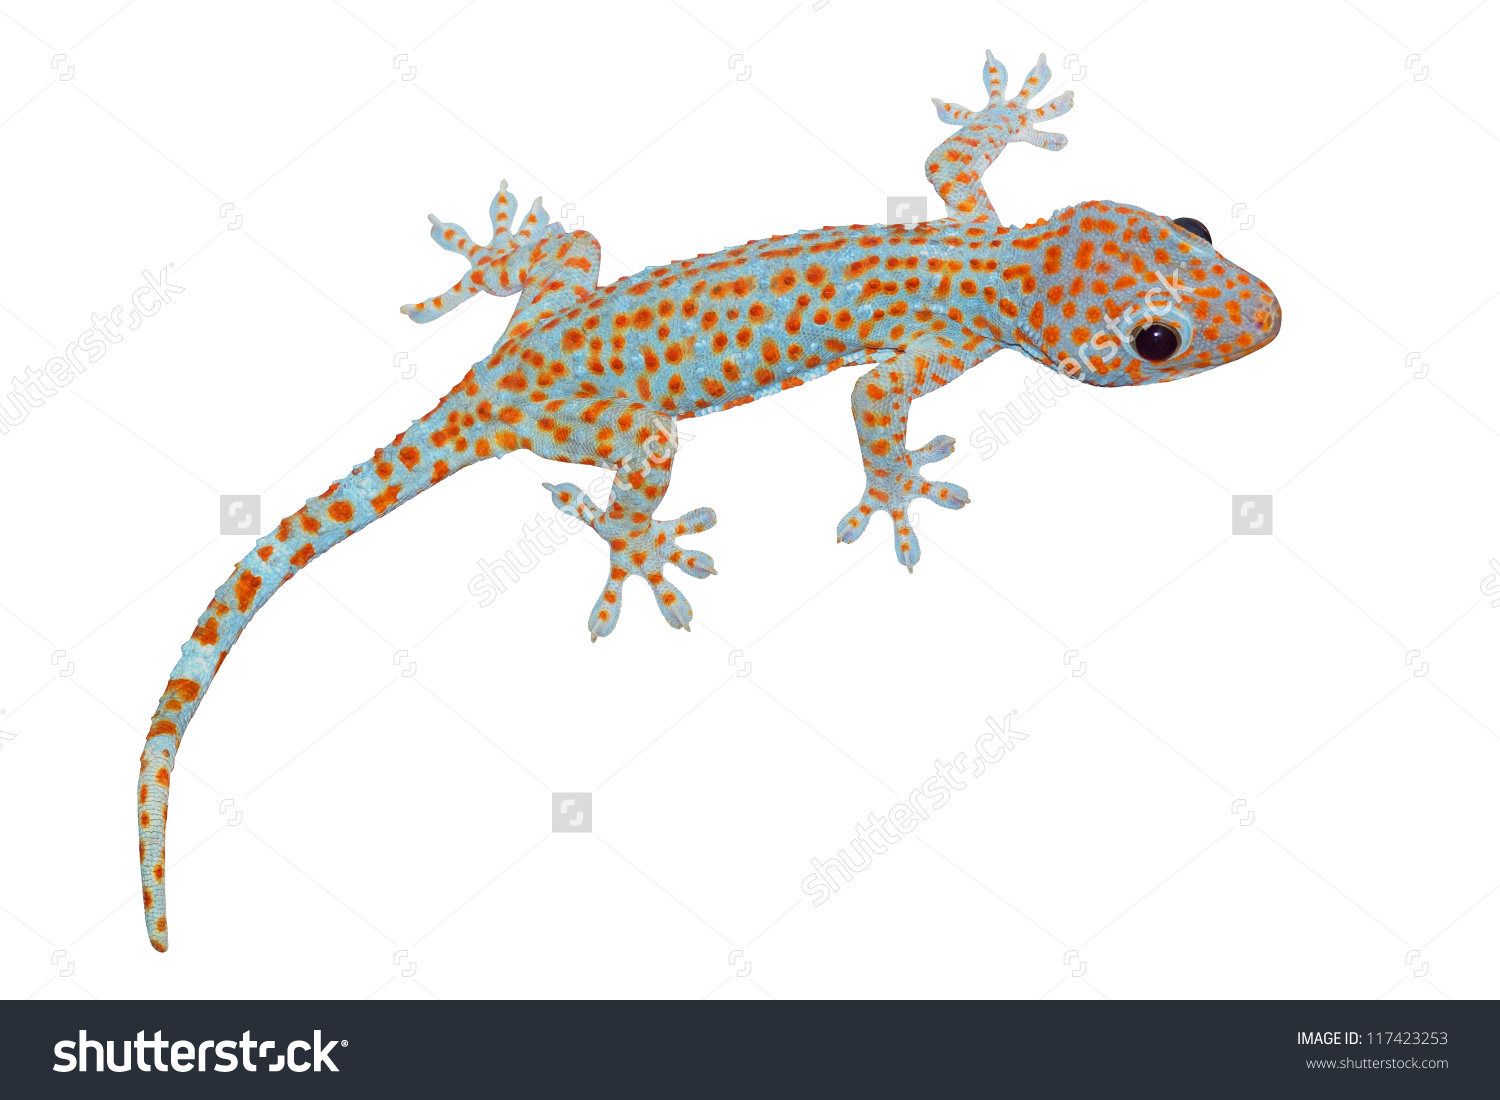 Tokay Gecko clipart #2, Download drawings